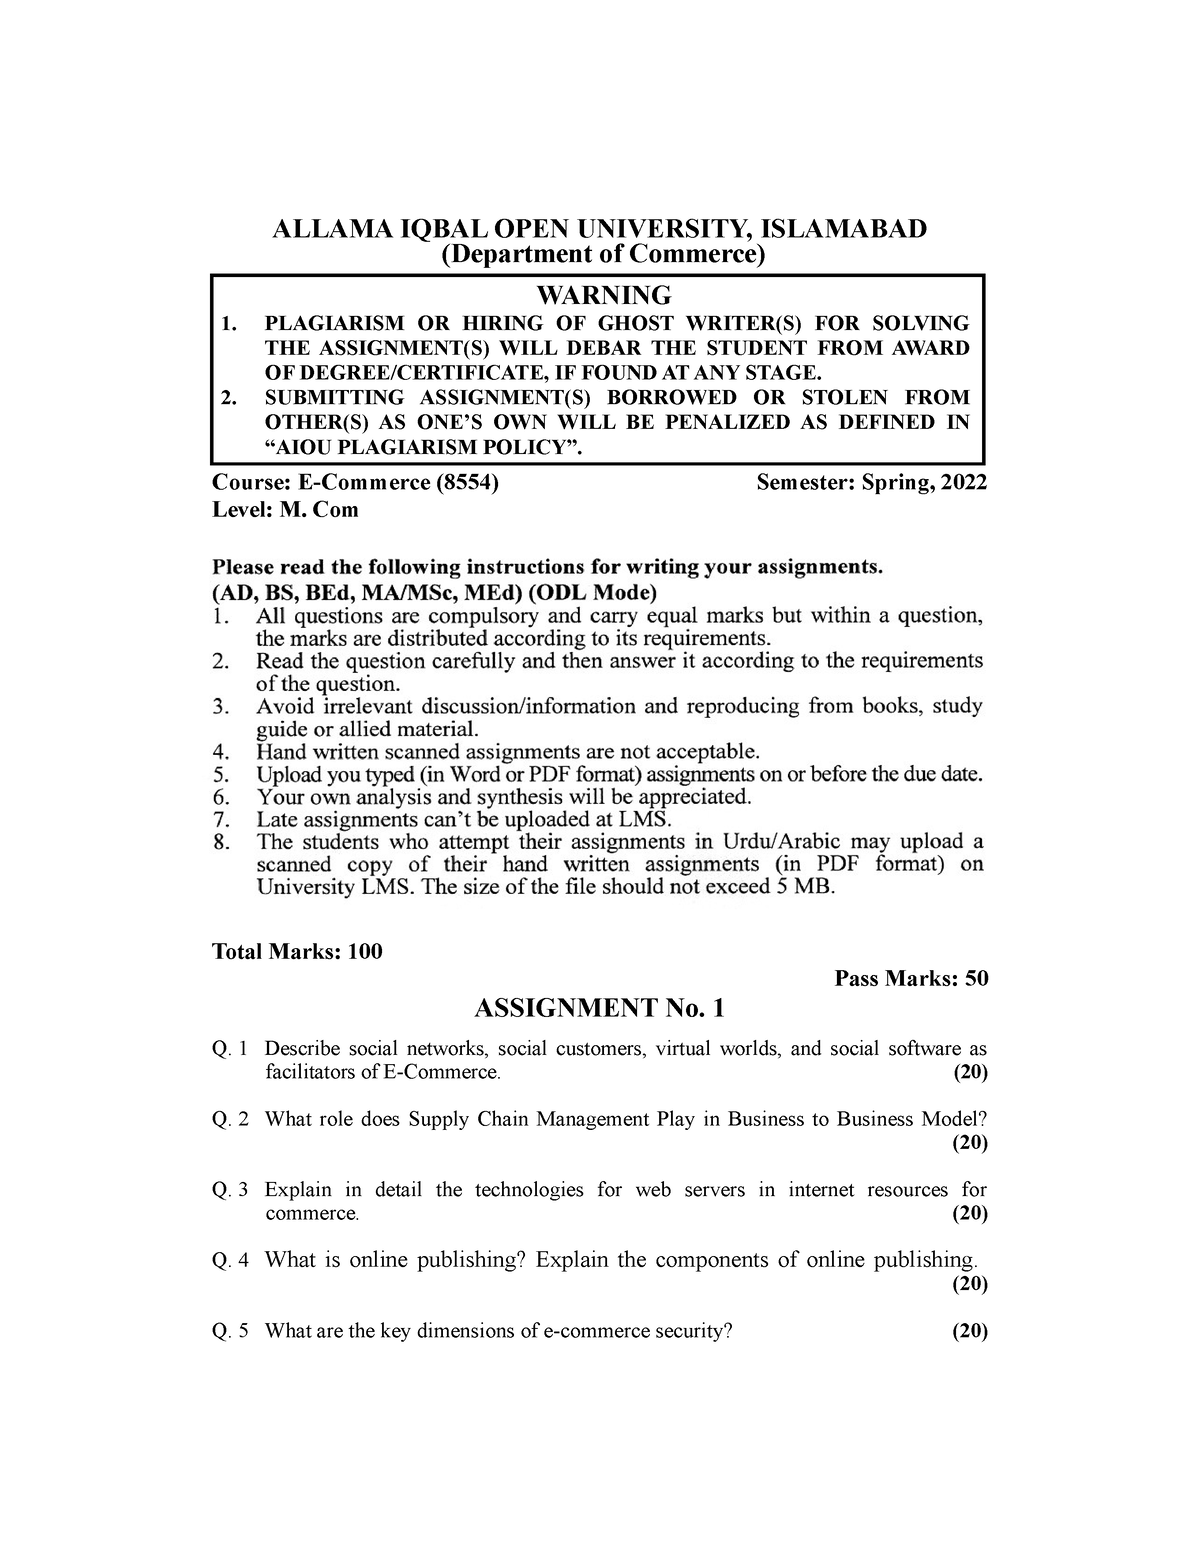 assignment allama iqbal open university